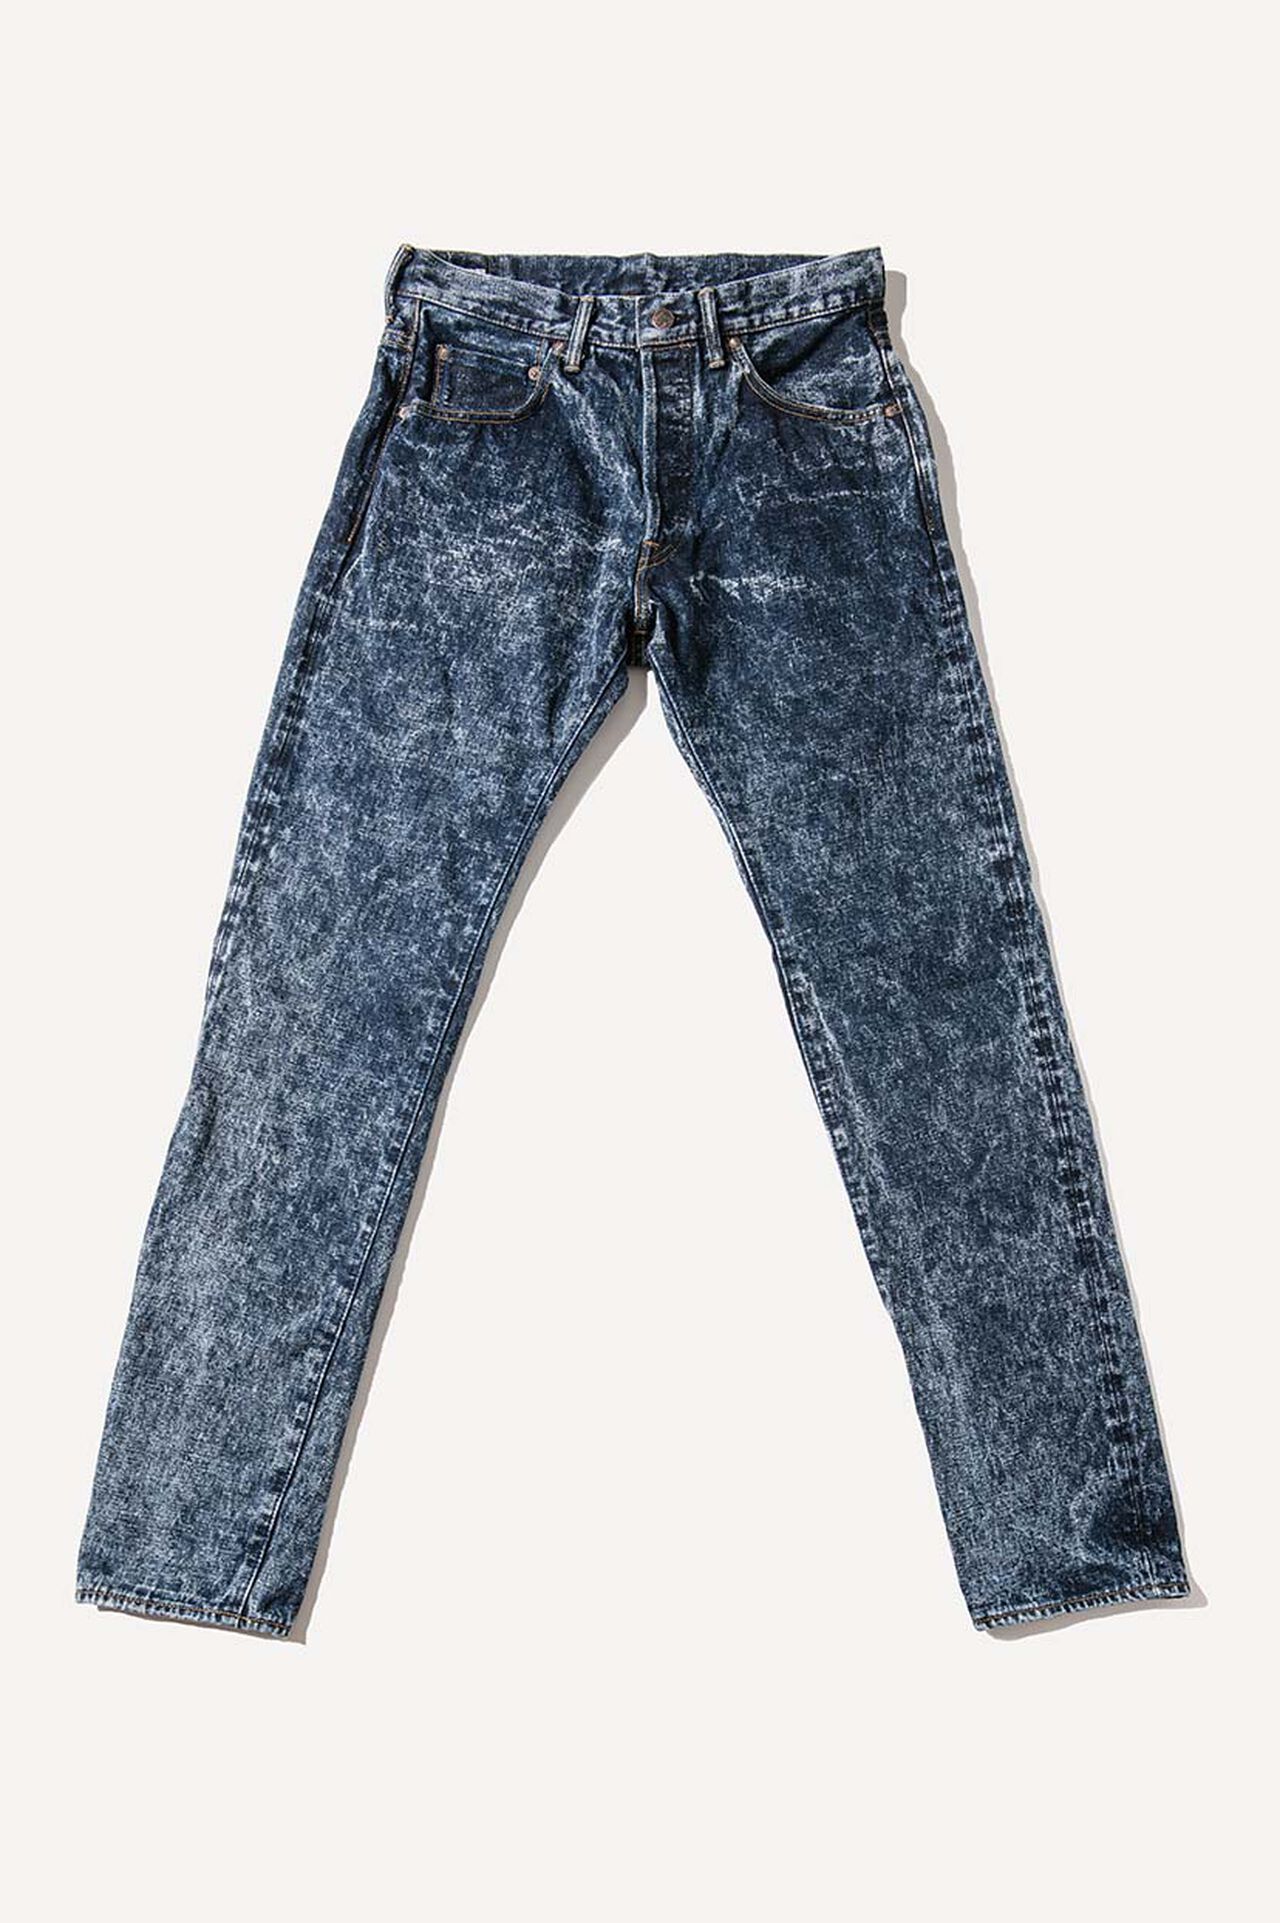 NAWHT 16.5oz Natural Indigo Acid Wash High Rise Tapered Jeans,, large image number 6